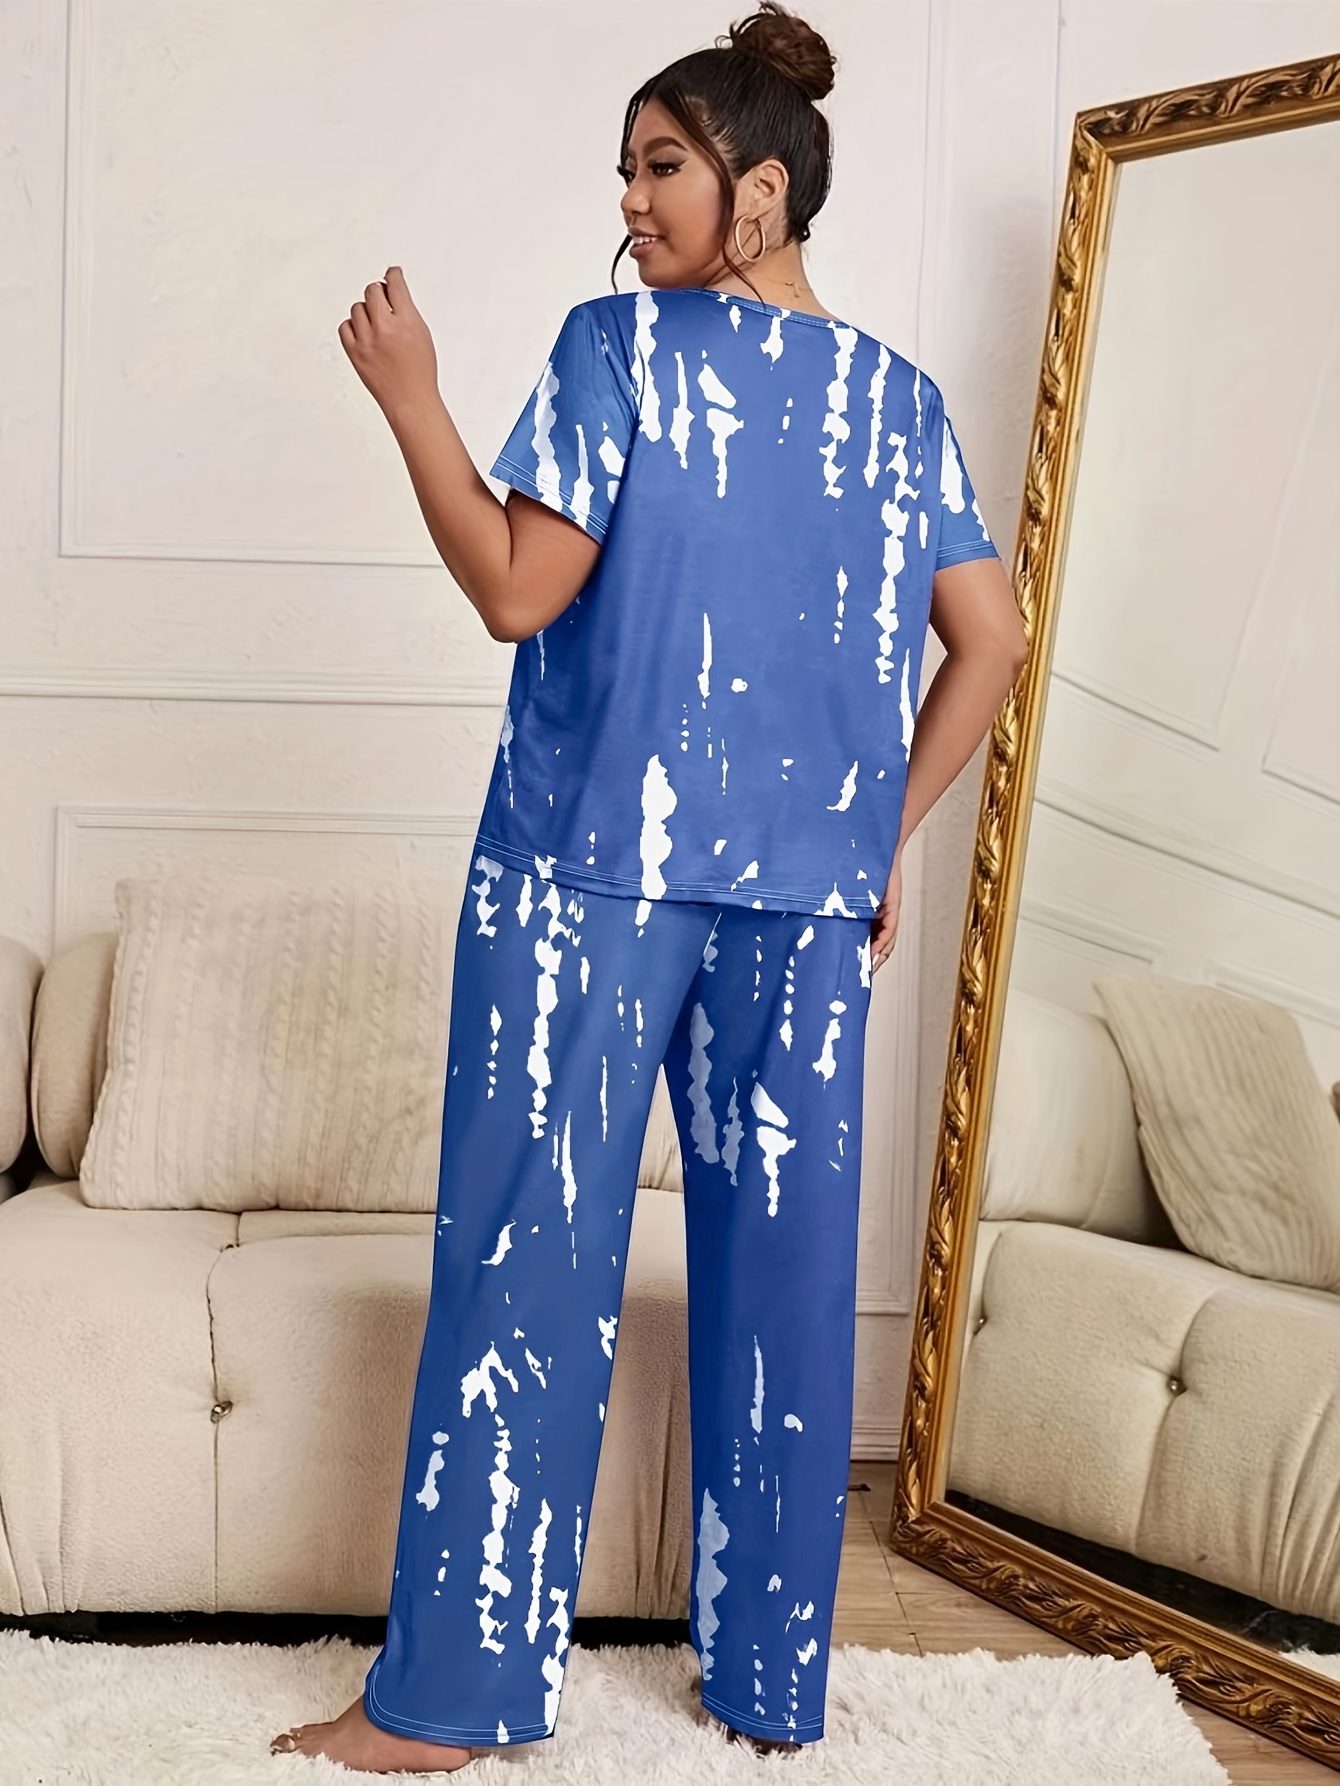 Women's Plus Size Short Sleeve Top And Pants Pajama Set White/blue